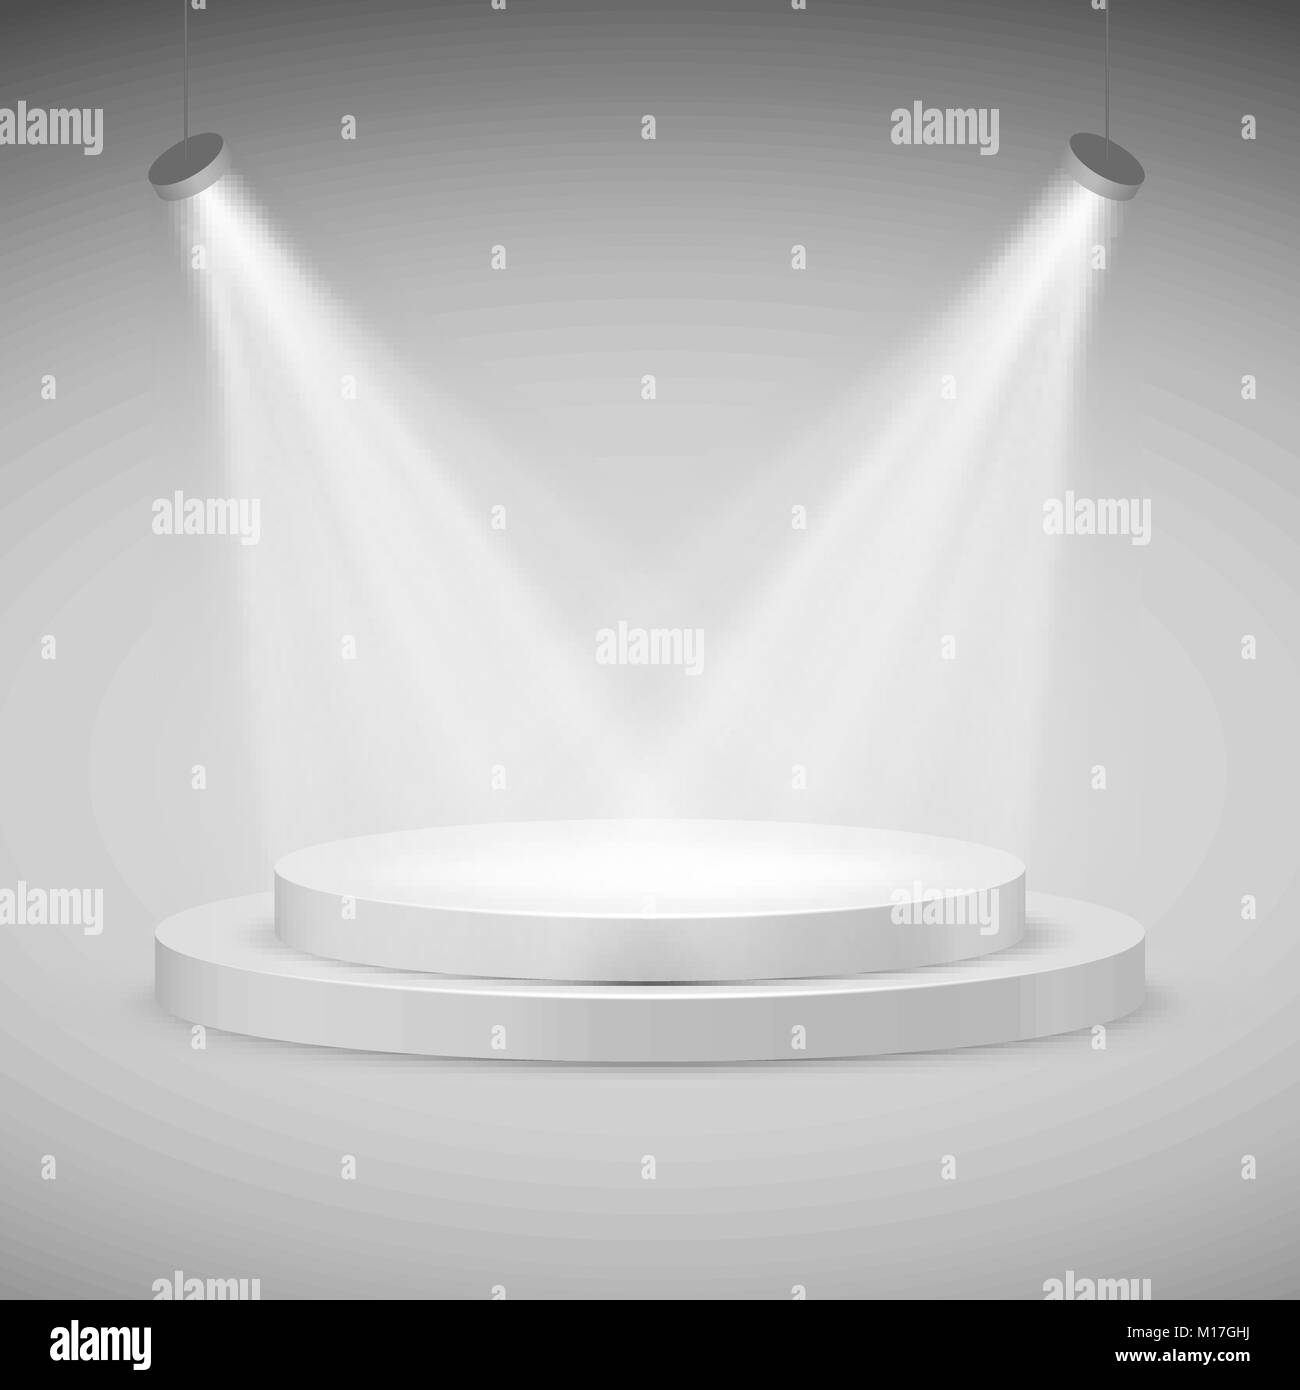 Round stage illuminated by spotlights. Realistic podium. Vector illustration Stock Vector